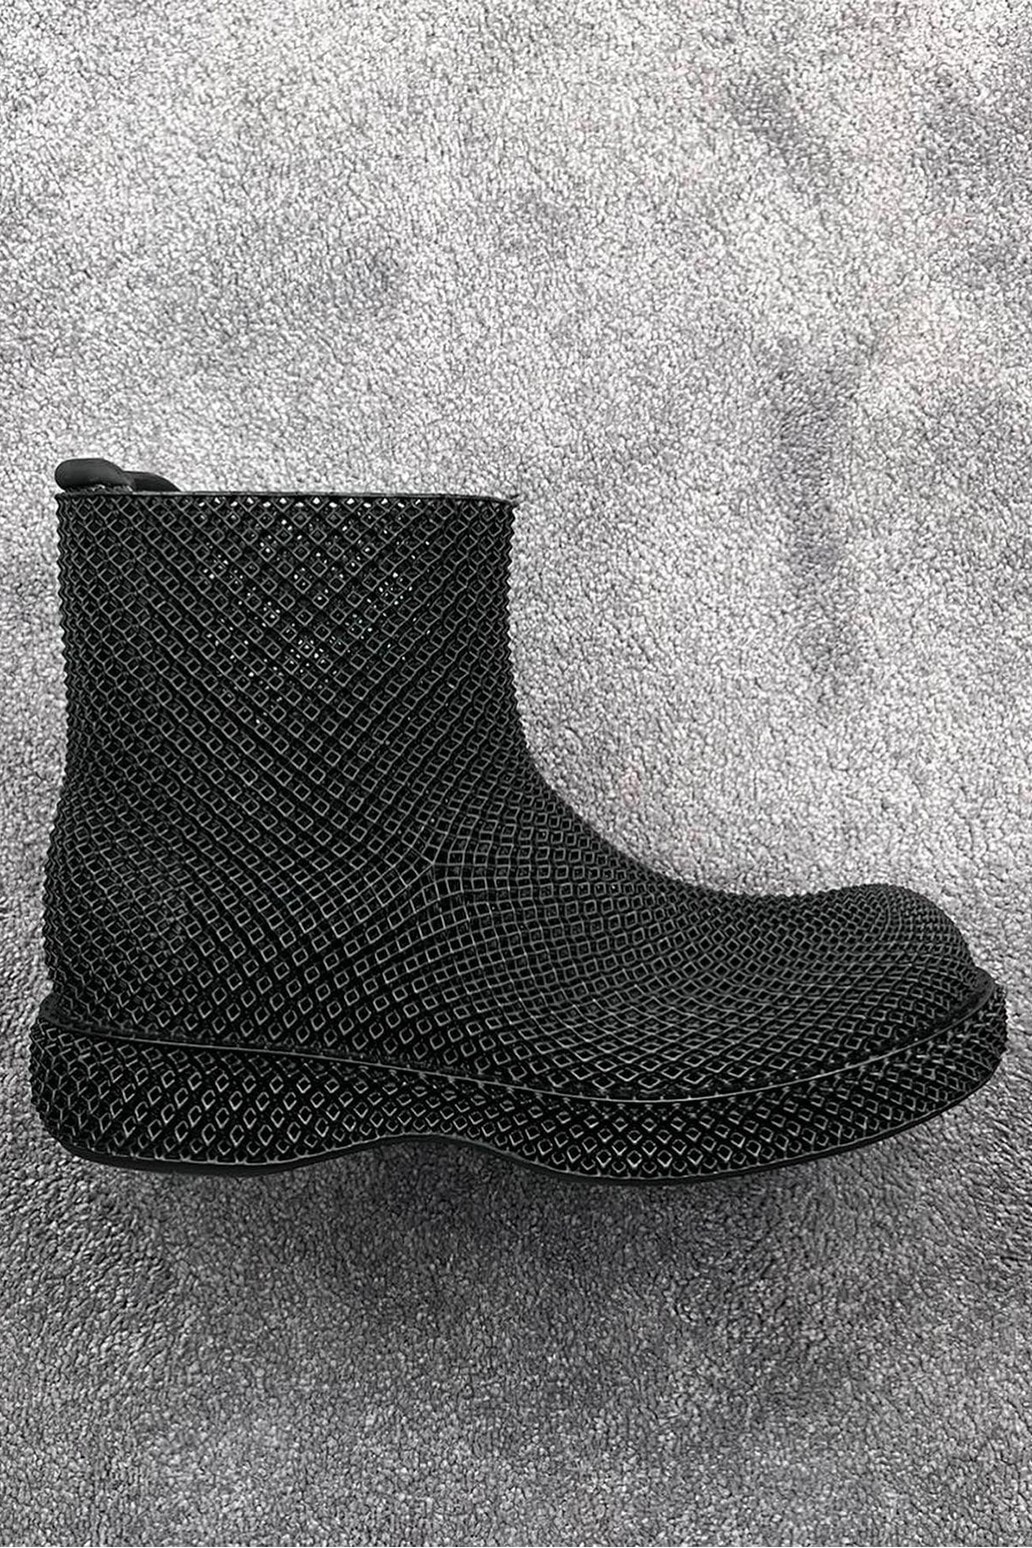 dior men's 3D printed footwear thibo denis shoes boots derbys 